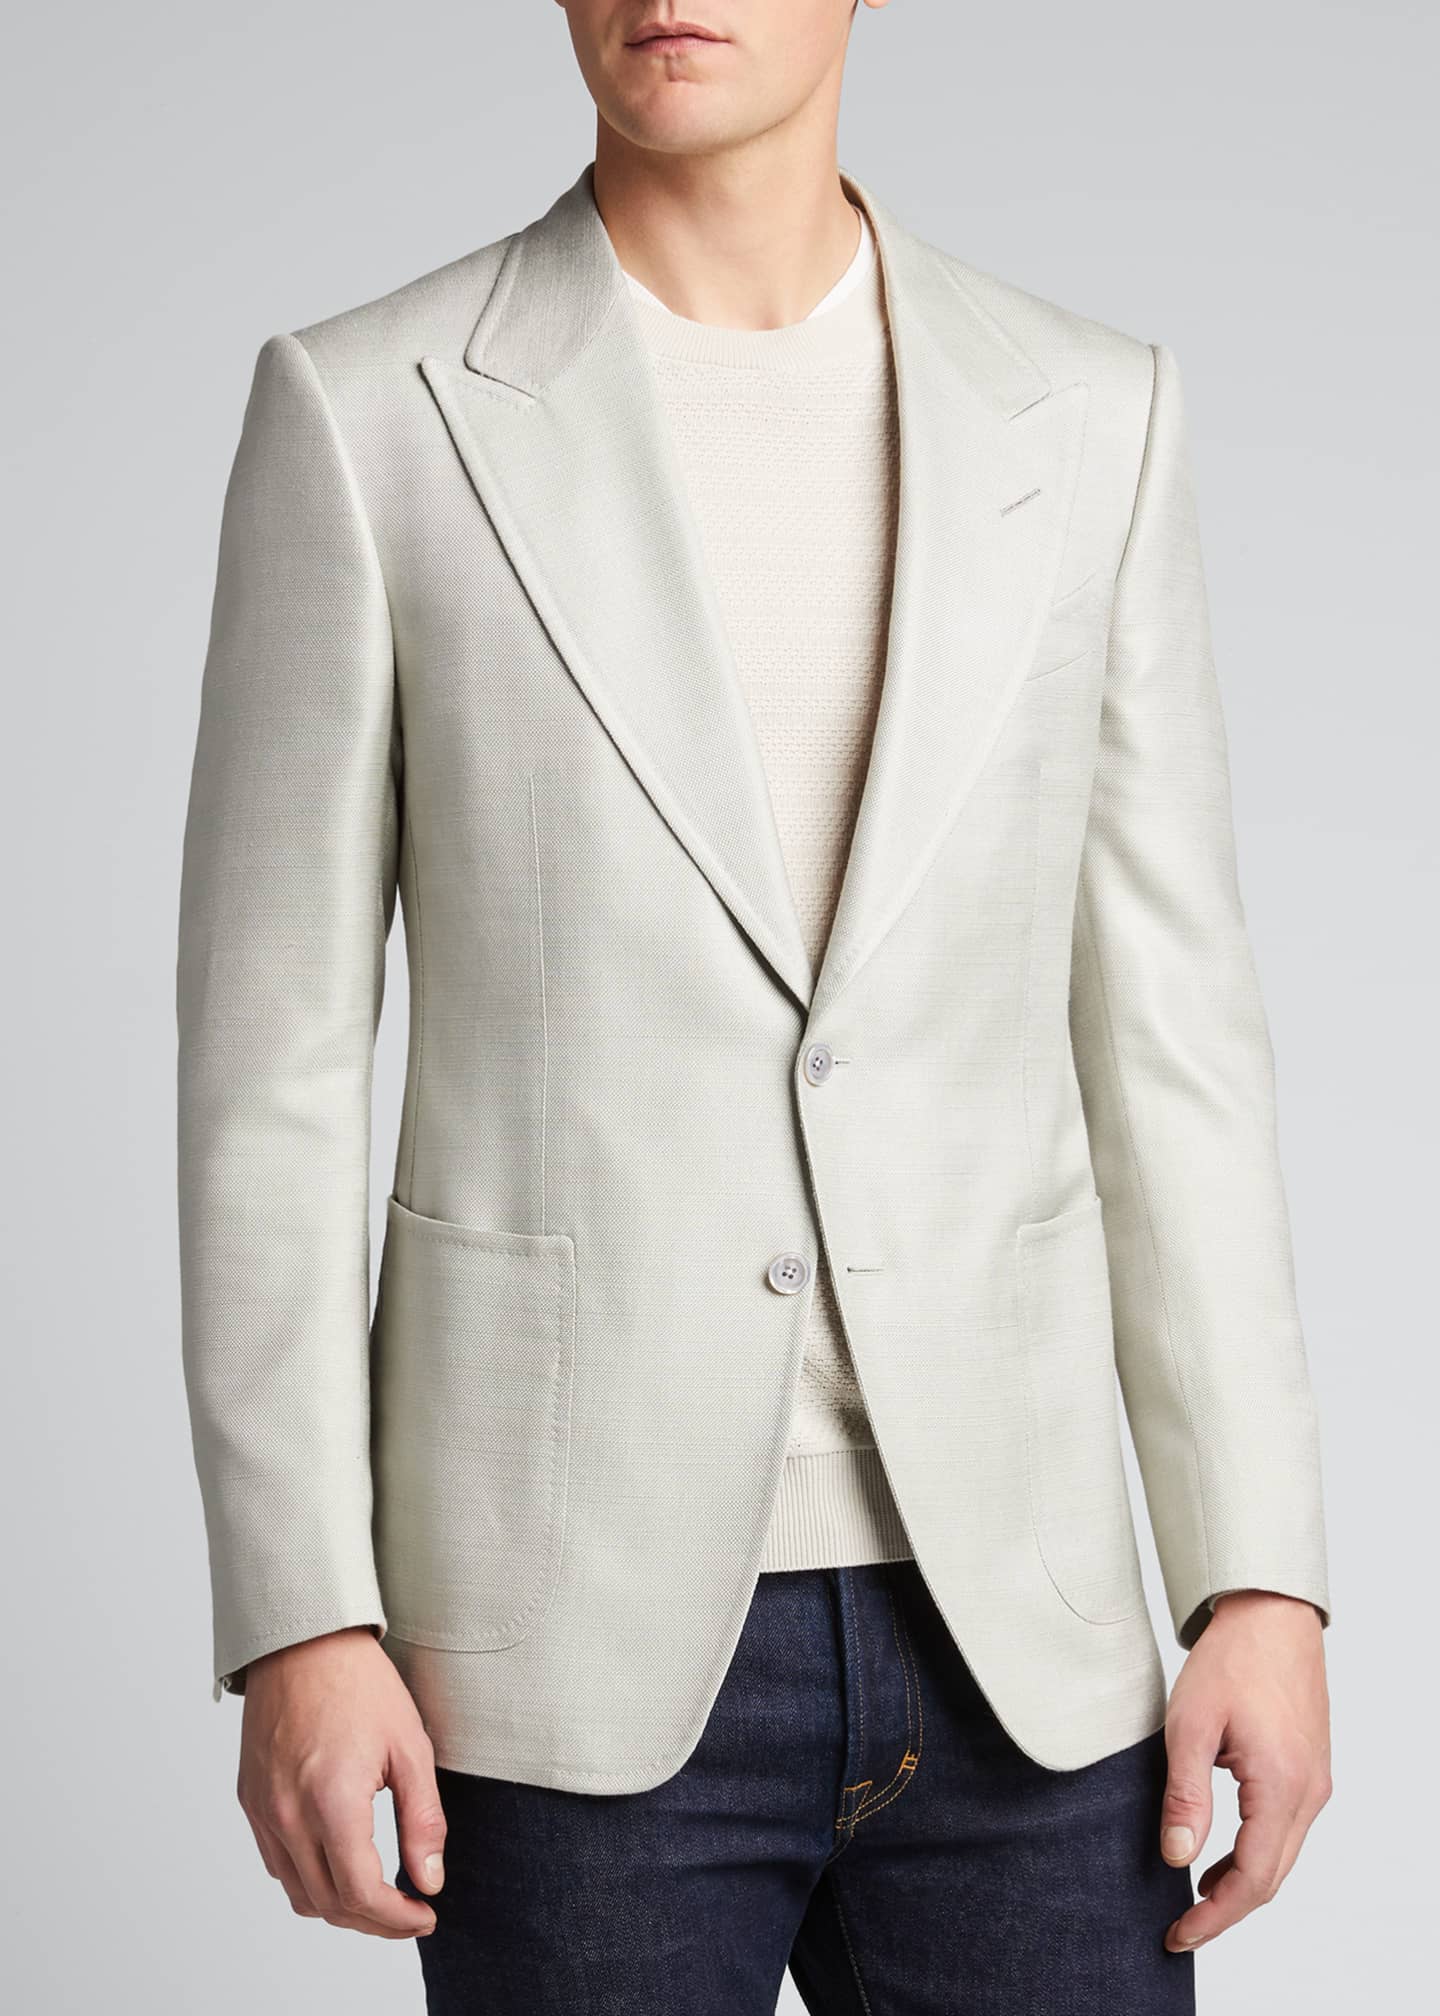 TOM FORD Men's Shelton Silk Canvas Sport Jacket - Bergdorf Goodman